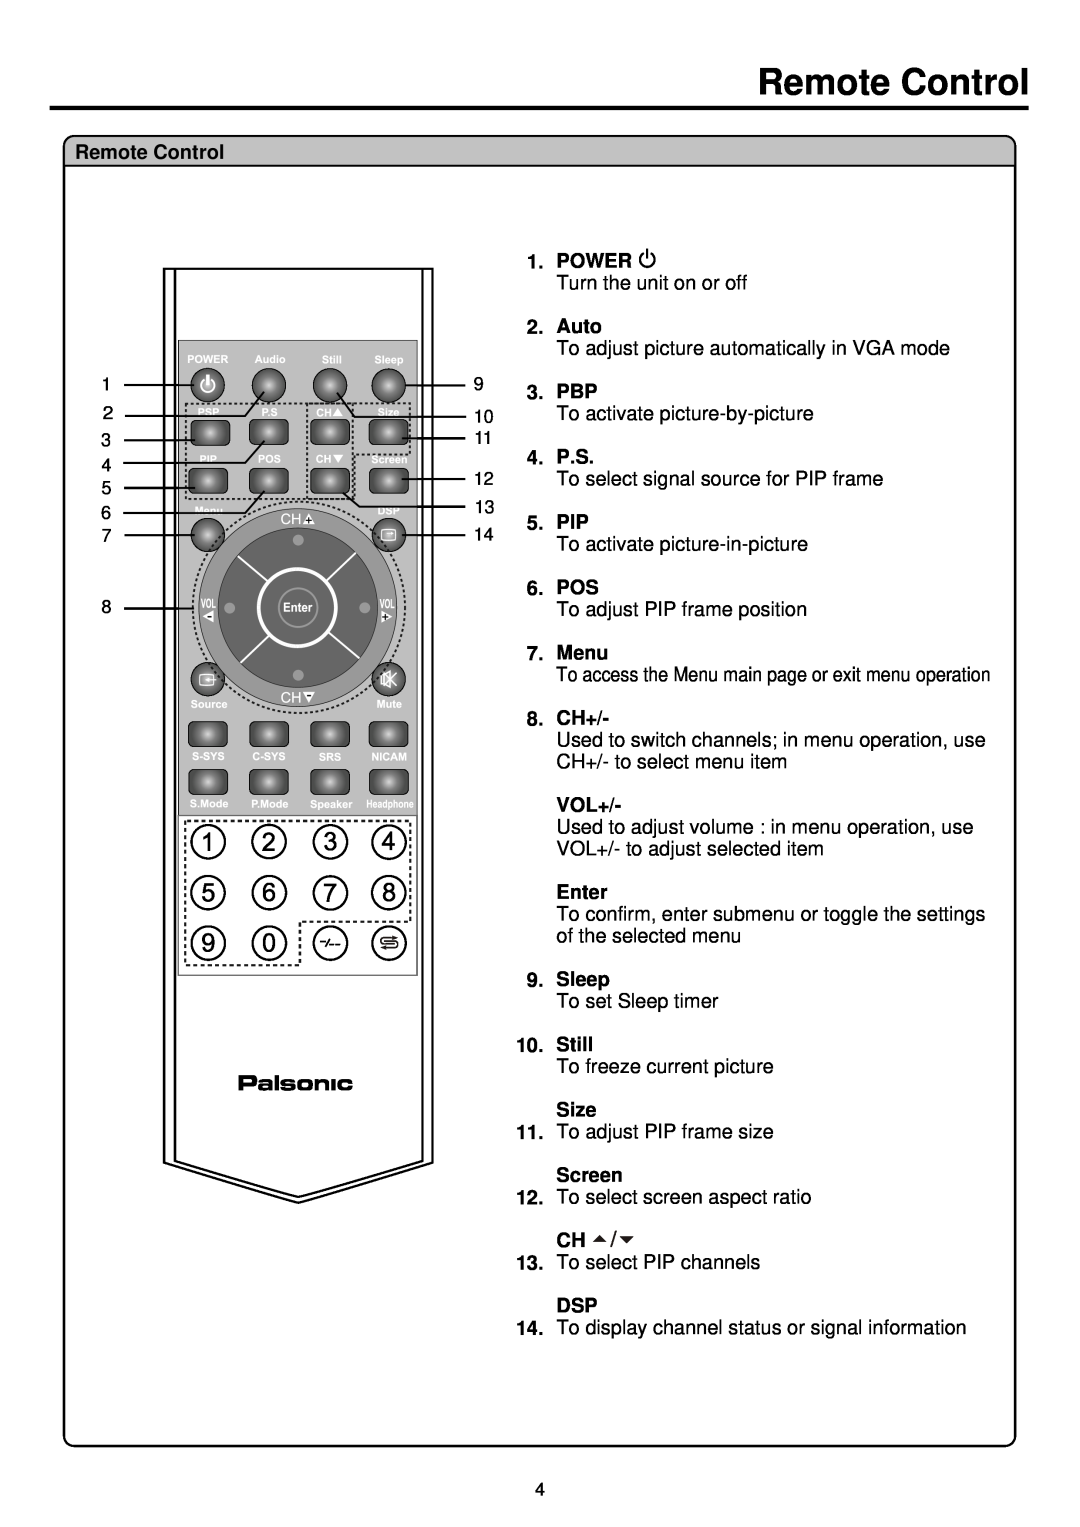 Palsonic TFTV930 Remote Control, Power, Auto, 9 3. PBP, Pos, Menu, 8. CH+, Vol+, Enter, Sleep, Still, Size, Screen 